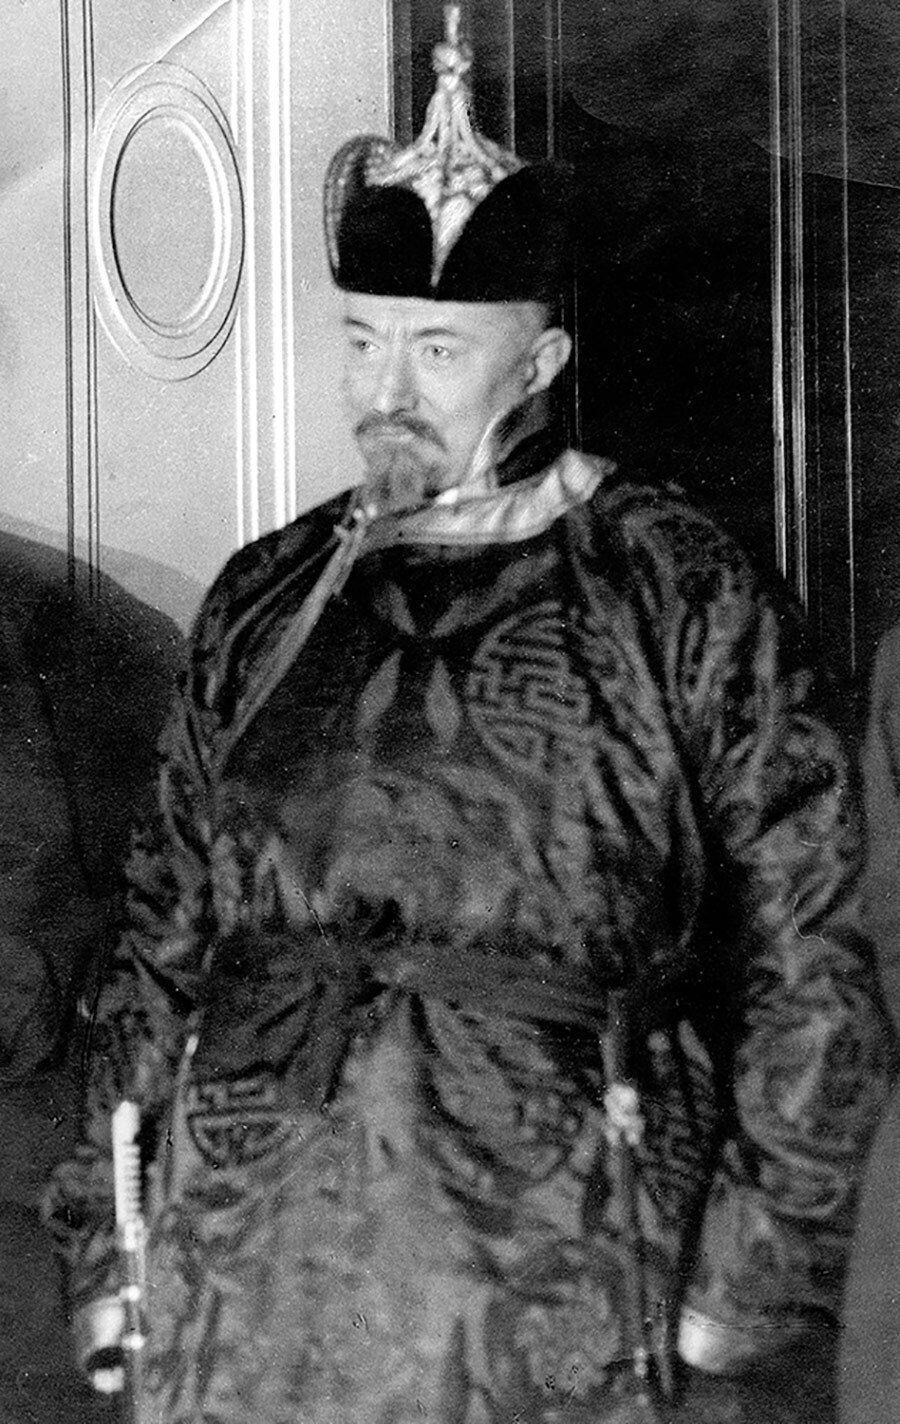  Gueorgui Chicherin en un traje mongol